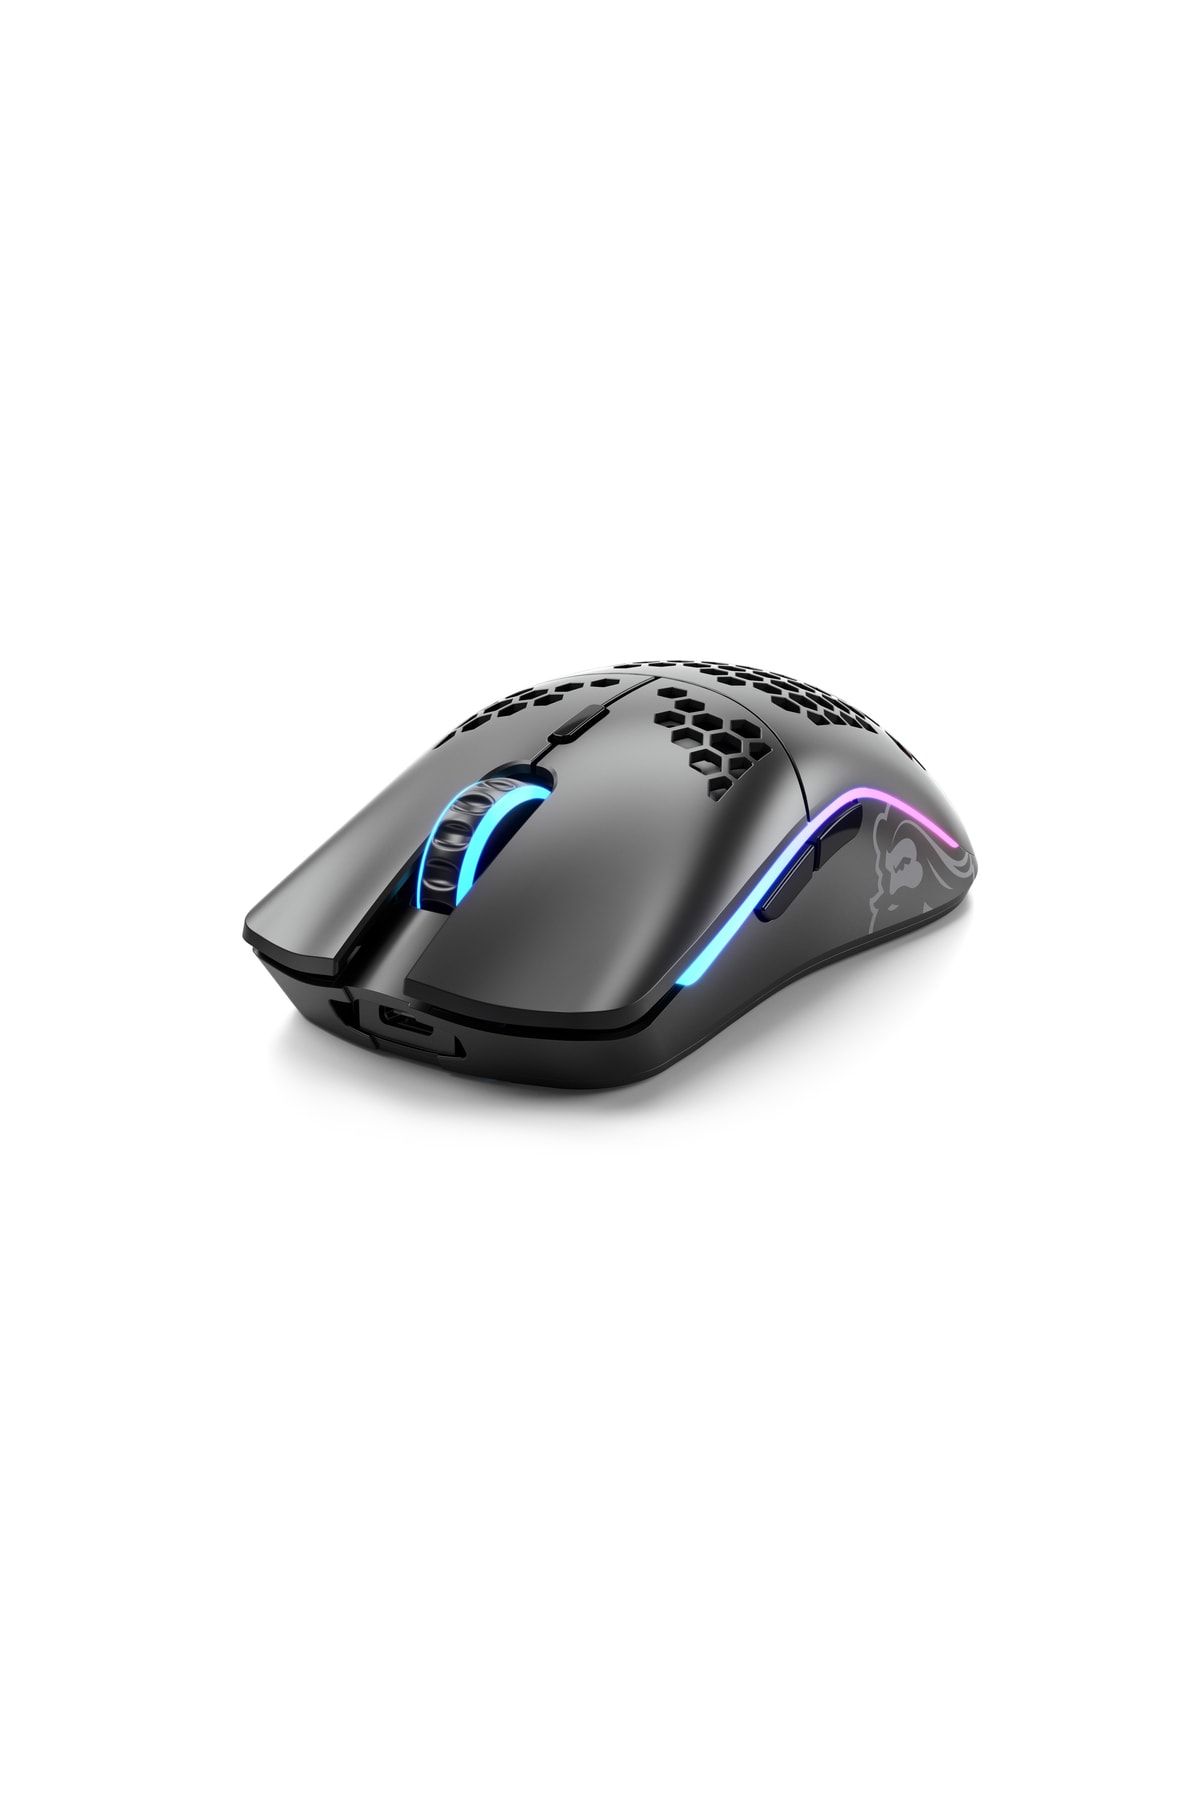 Glorious Kablosuz Model O Gaming Mouse Mat Siyah